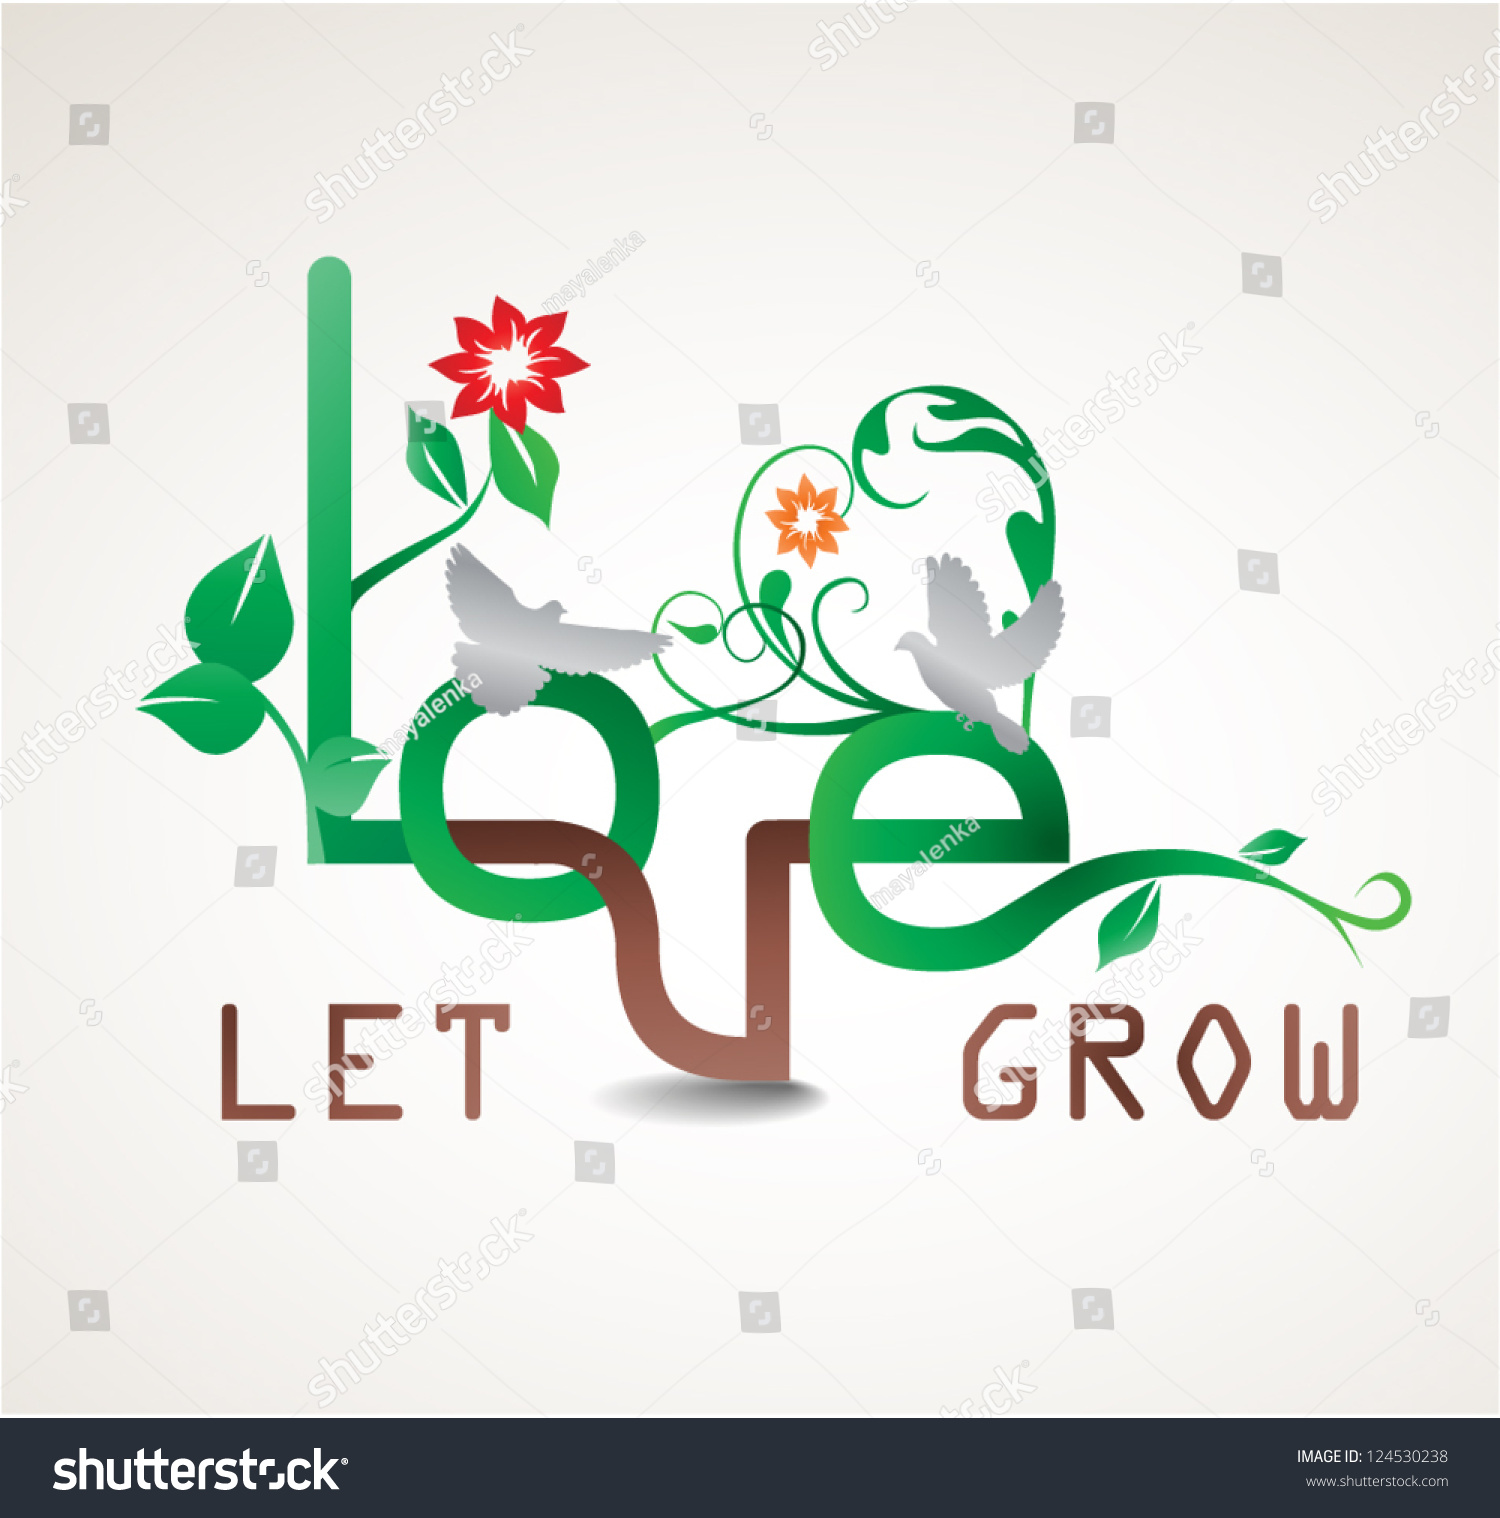 Download Let Love Grow Vector Illustration Stock Vector 124530238 ...